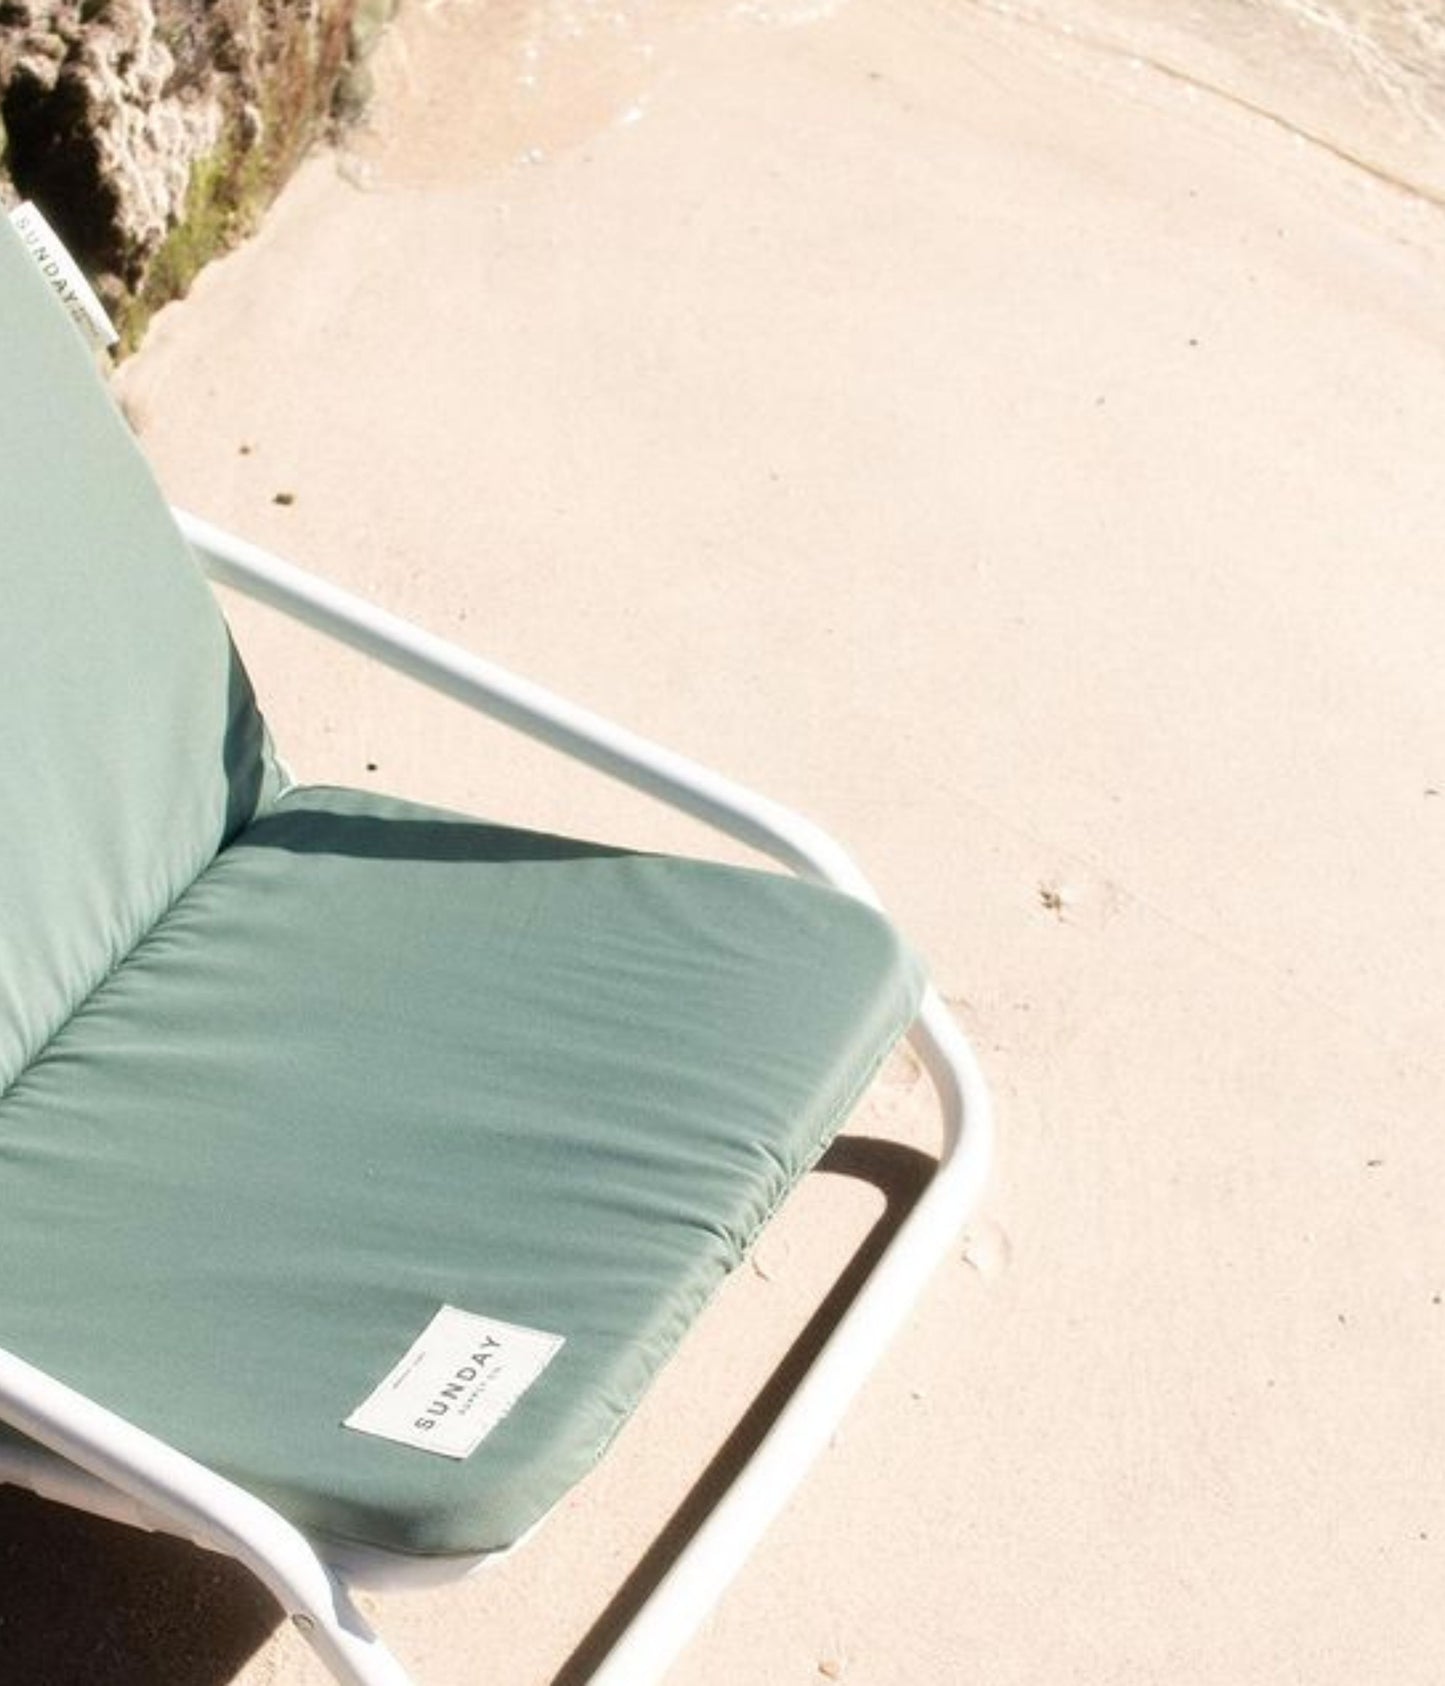 Tallow Beach Chair Set